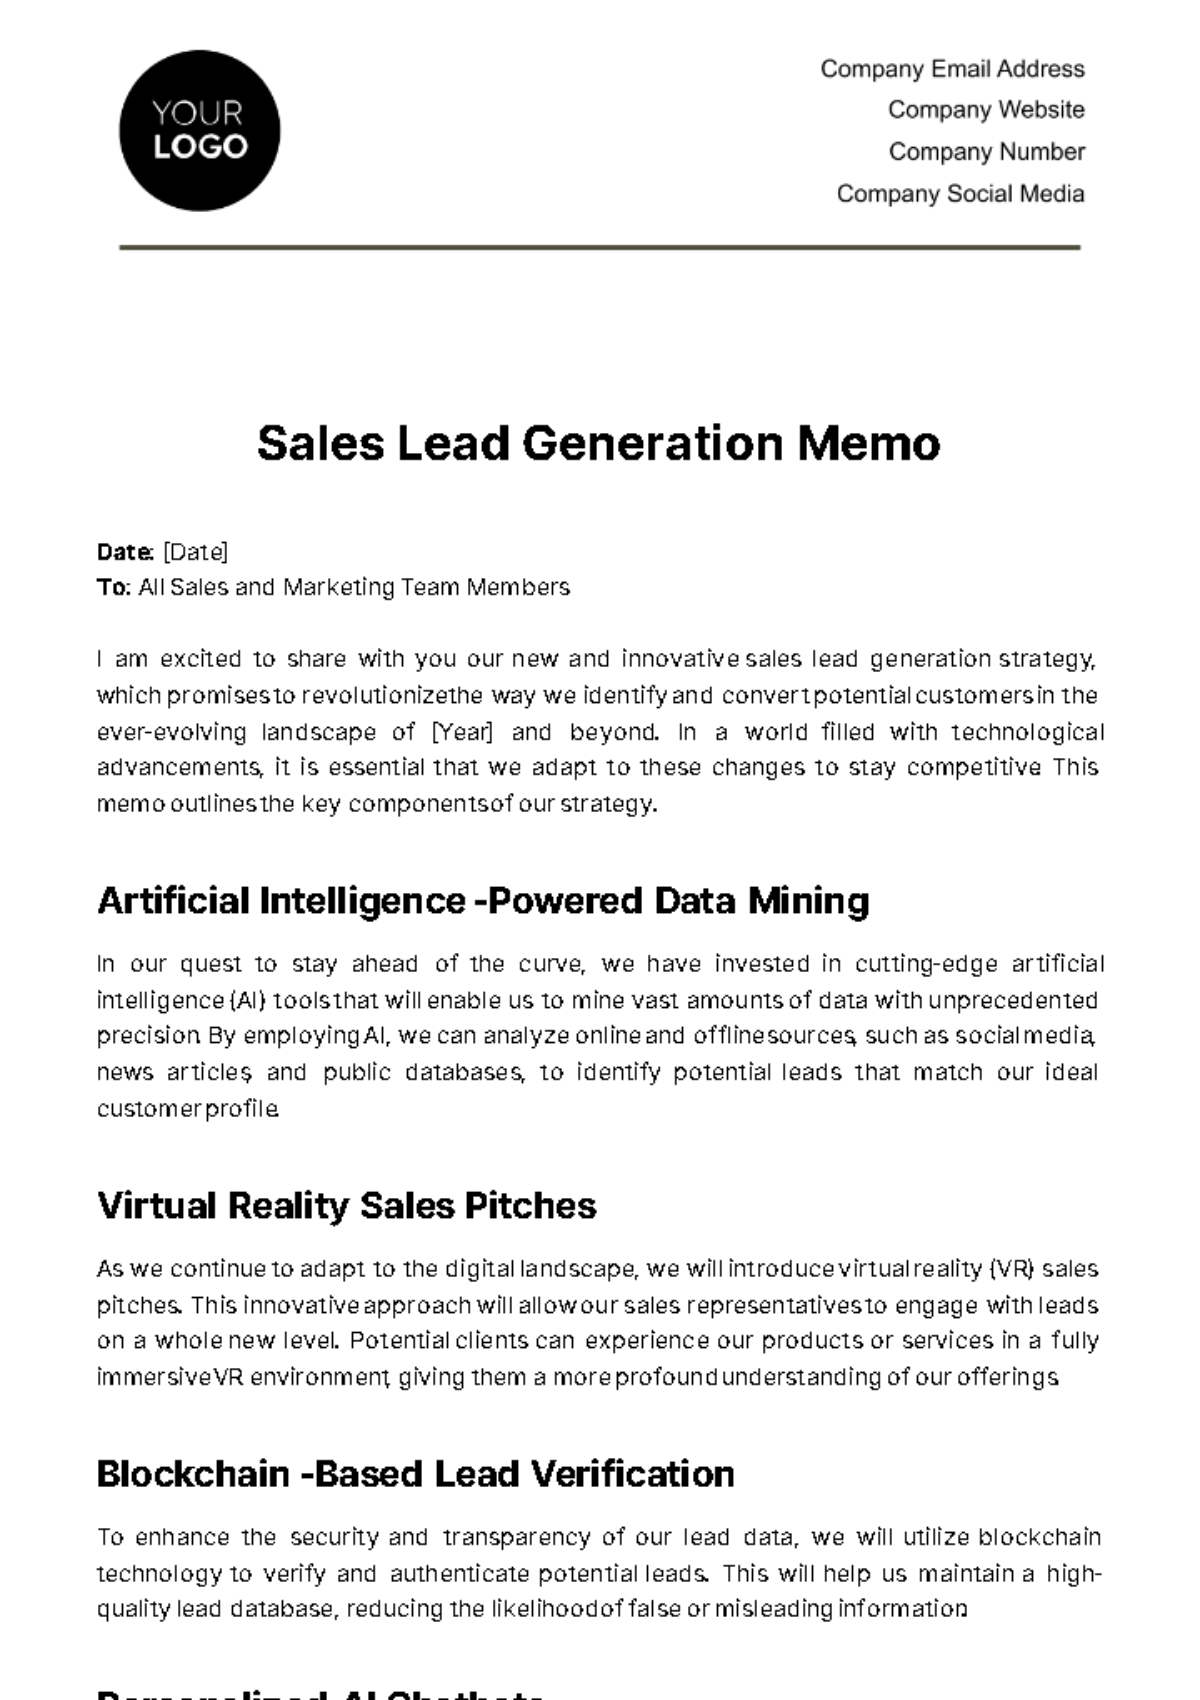 Sales Lead Generation Memo Template